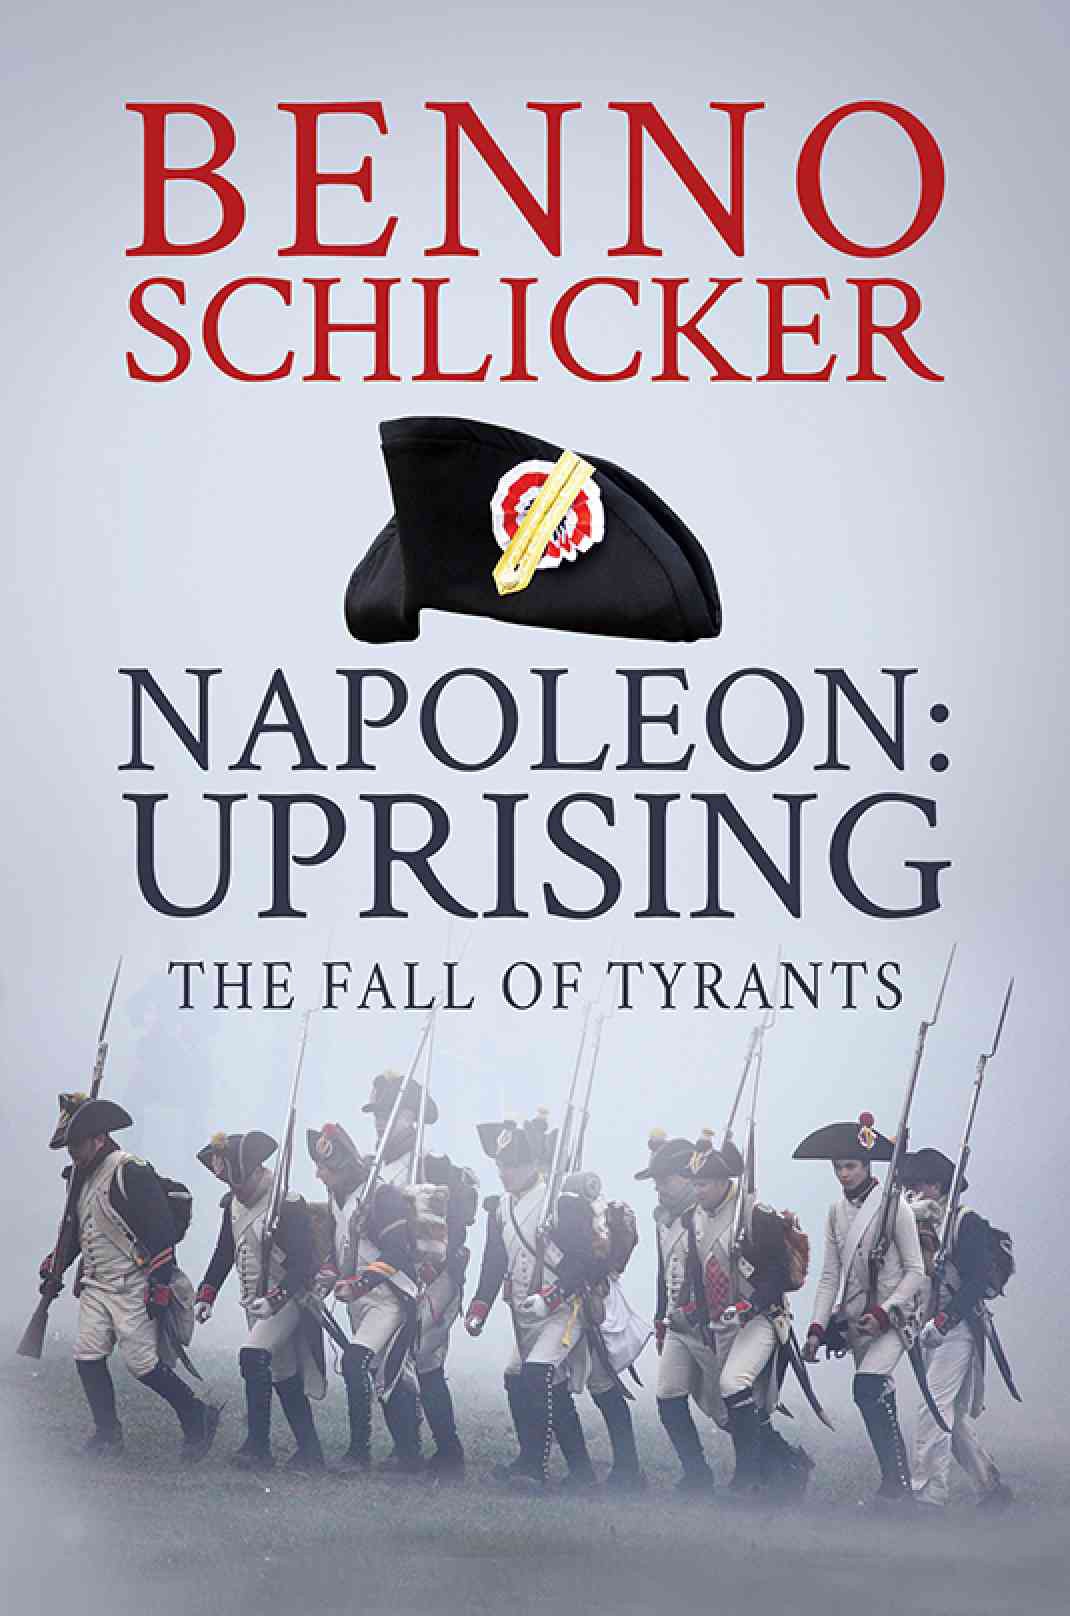 ‘Napoleon: Uprising’ by Benno Schlicker reviewed by Tom Holmberg